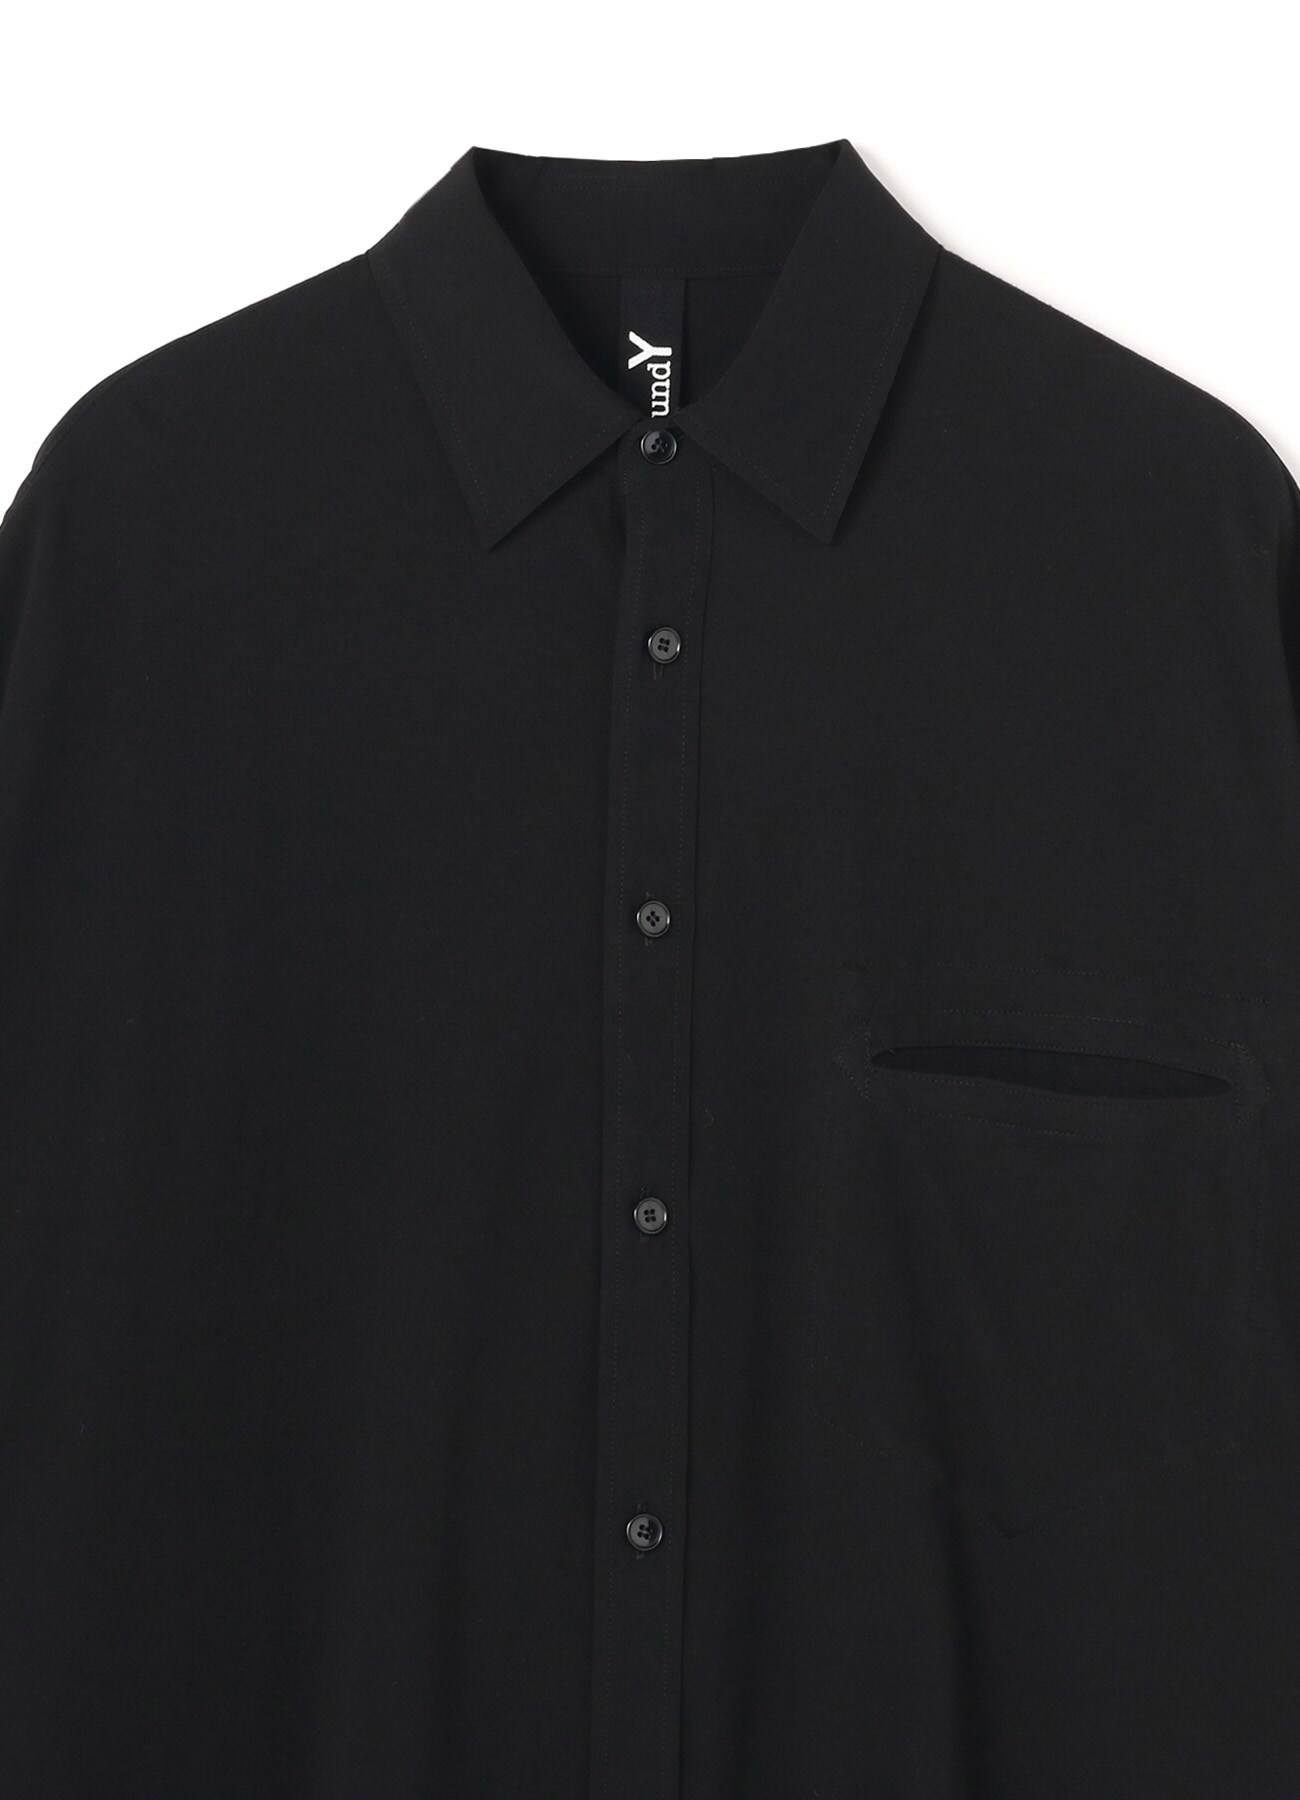 T/A vintage decyne combination Dolman short sleeves shirt